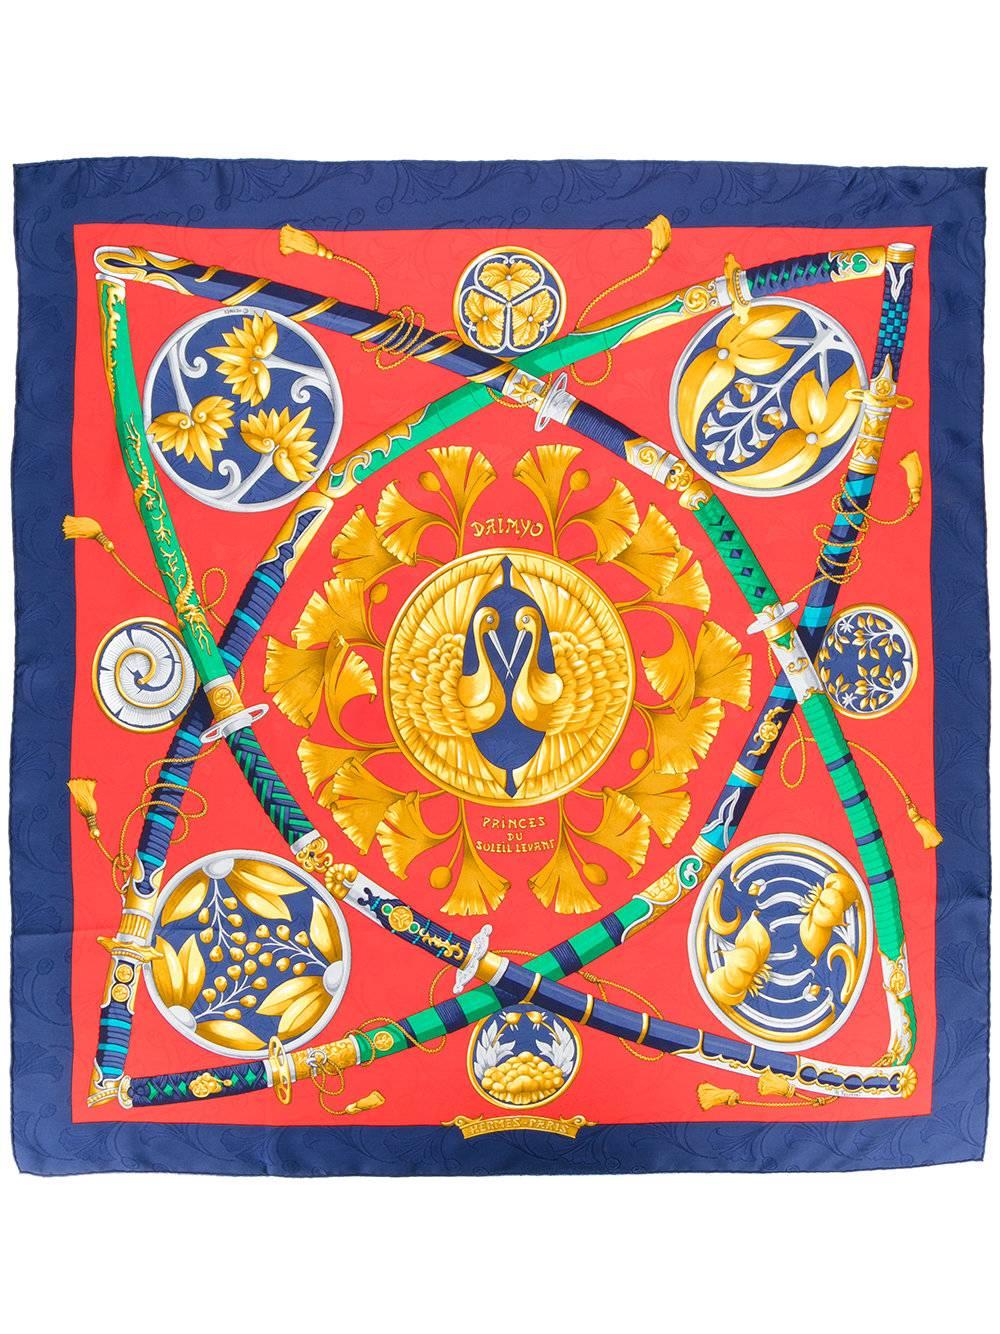 Multicoloured silk sword print scarf from Hermès Vintage featuring a 'princes du soleil levant' print.

Colour: Multicolour

Composition: 100% Silk

Measurements: length: 90cm, width: 88cm

Made in France

Condition: 10/10